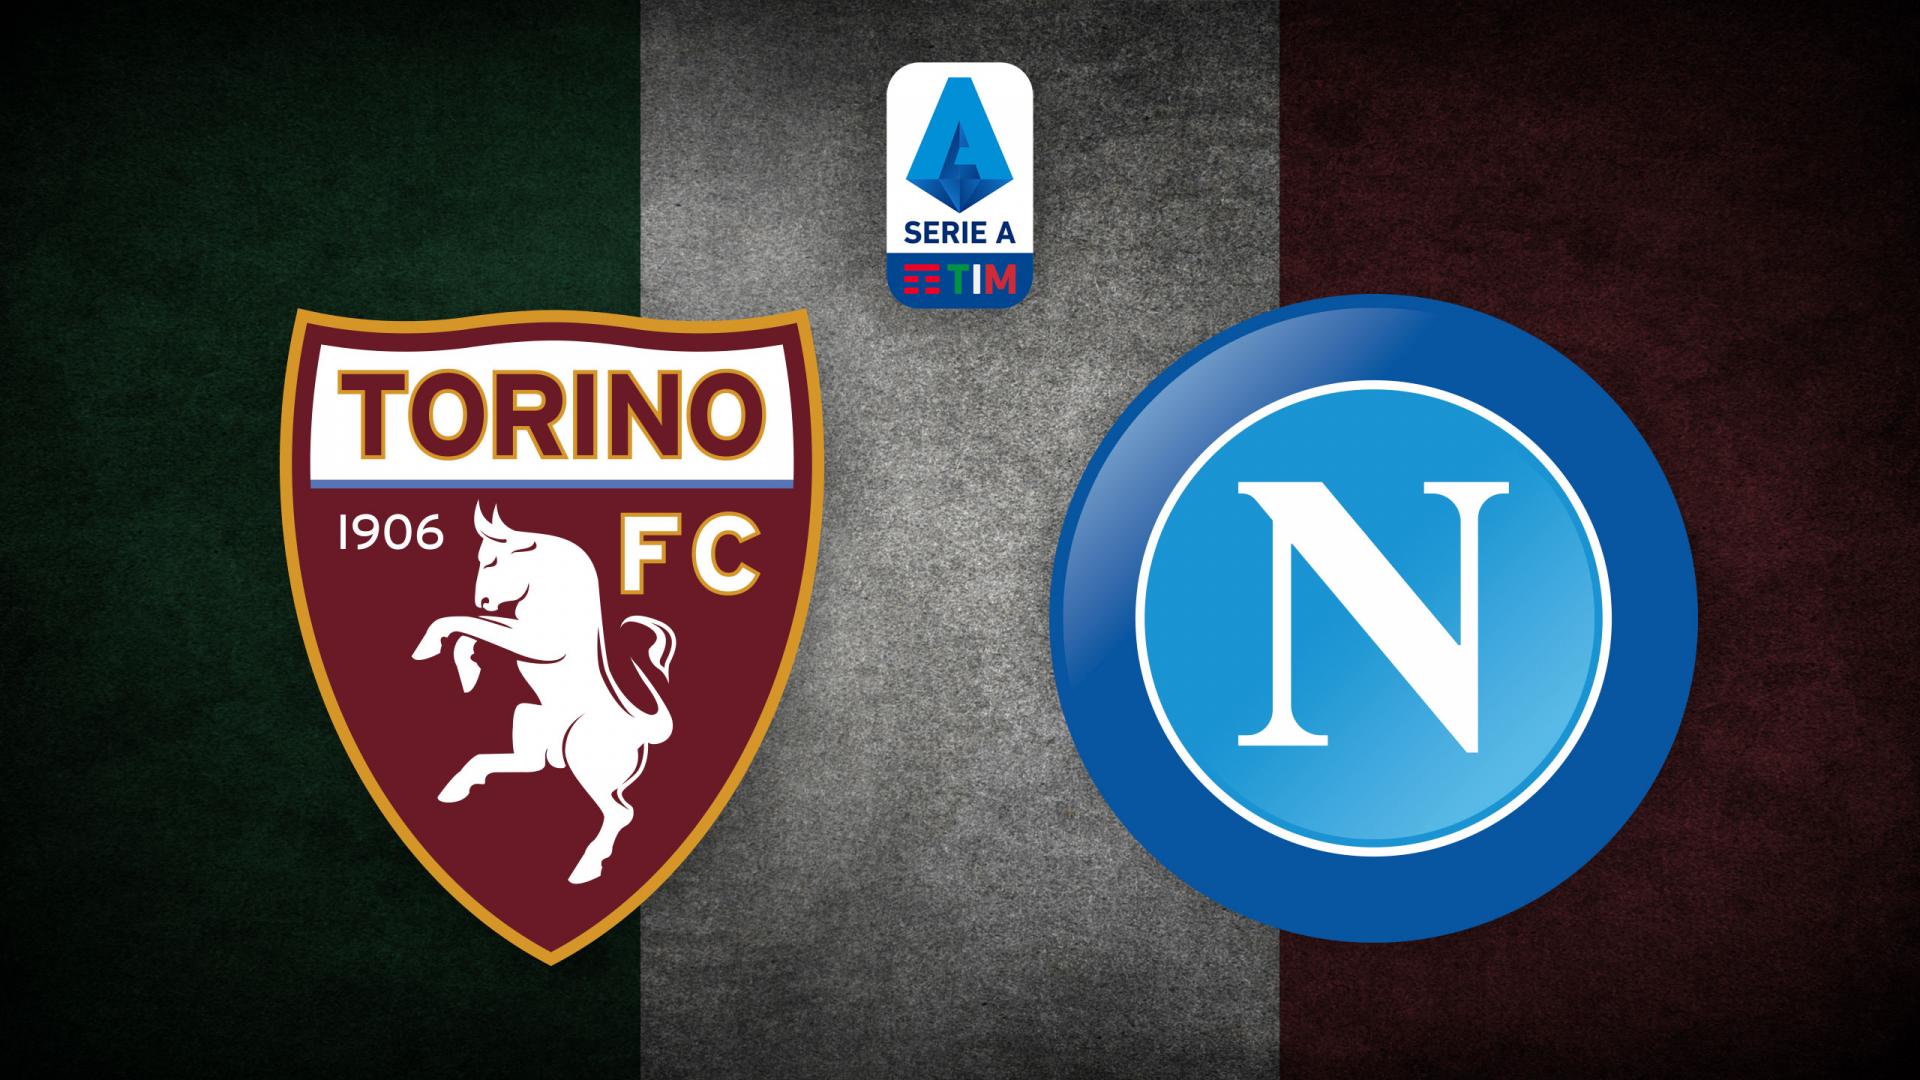 Torino - Napoli. Free betting tips